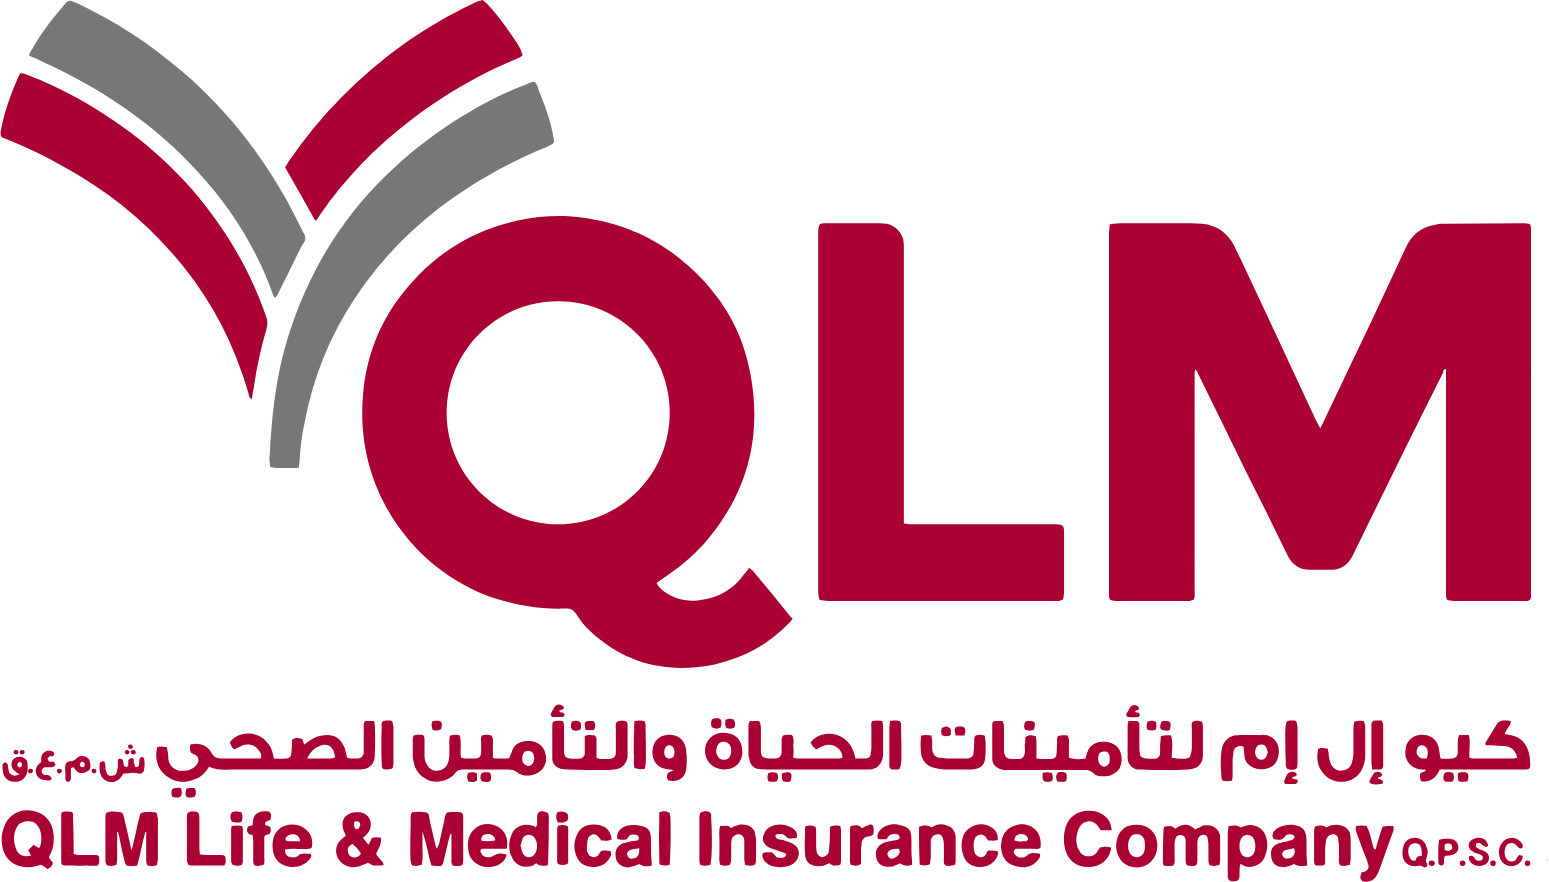 QLM Life & Medical Insurance Company logo large (transparent PNG)